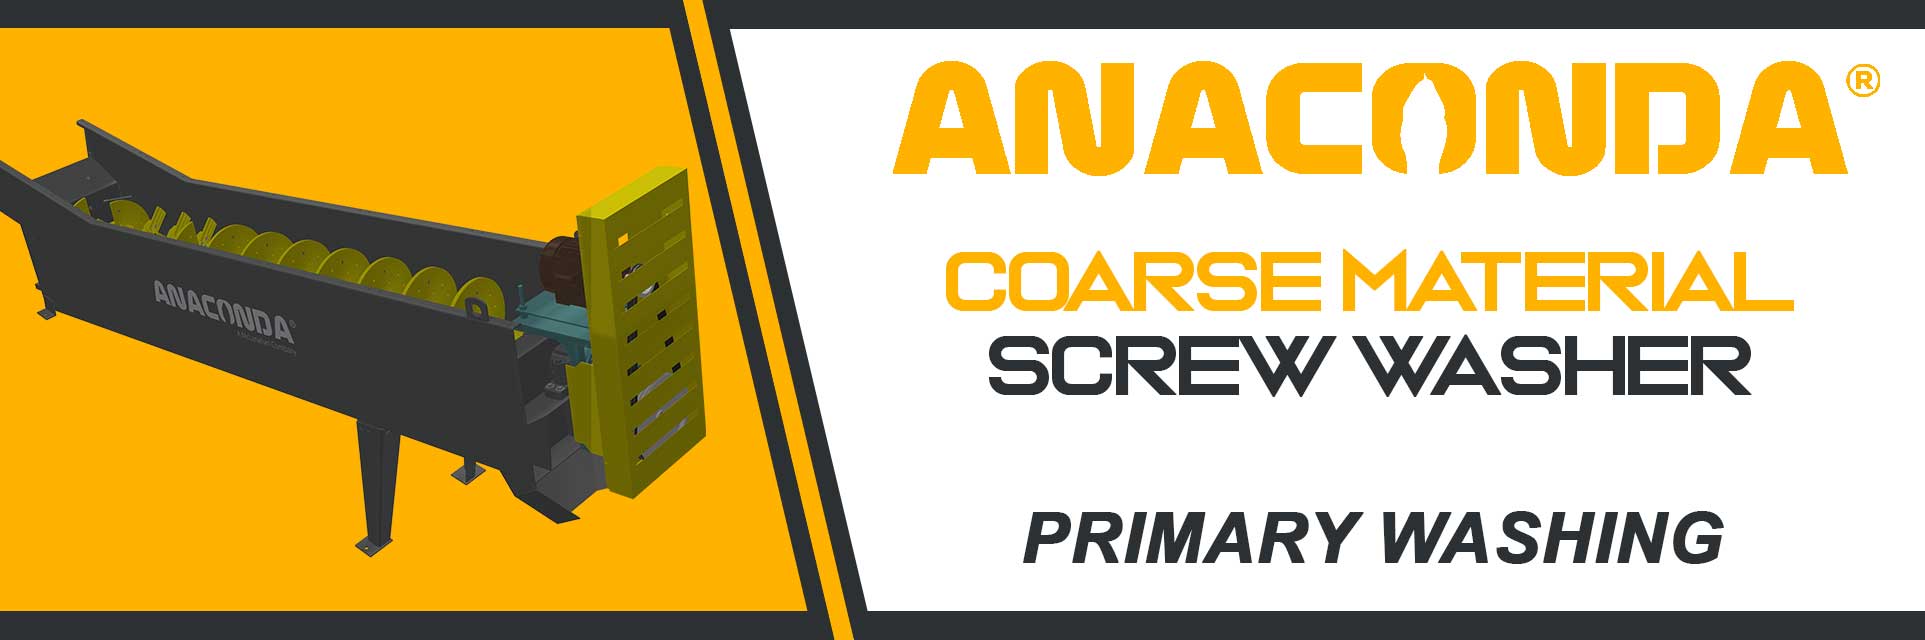 Coarse Material Screw Washer Desktop Banner